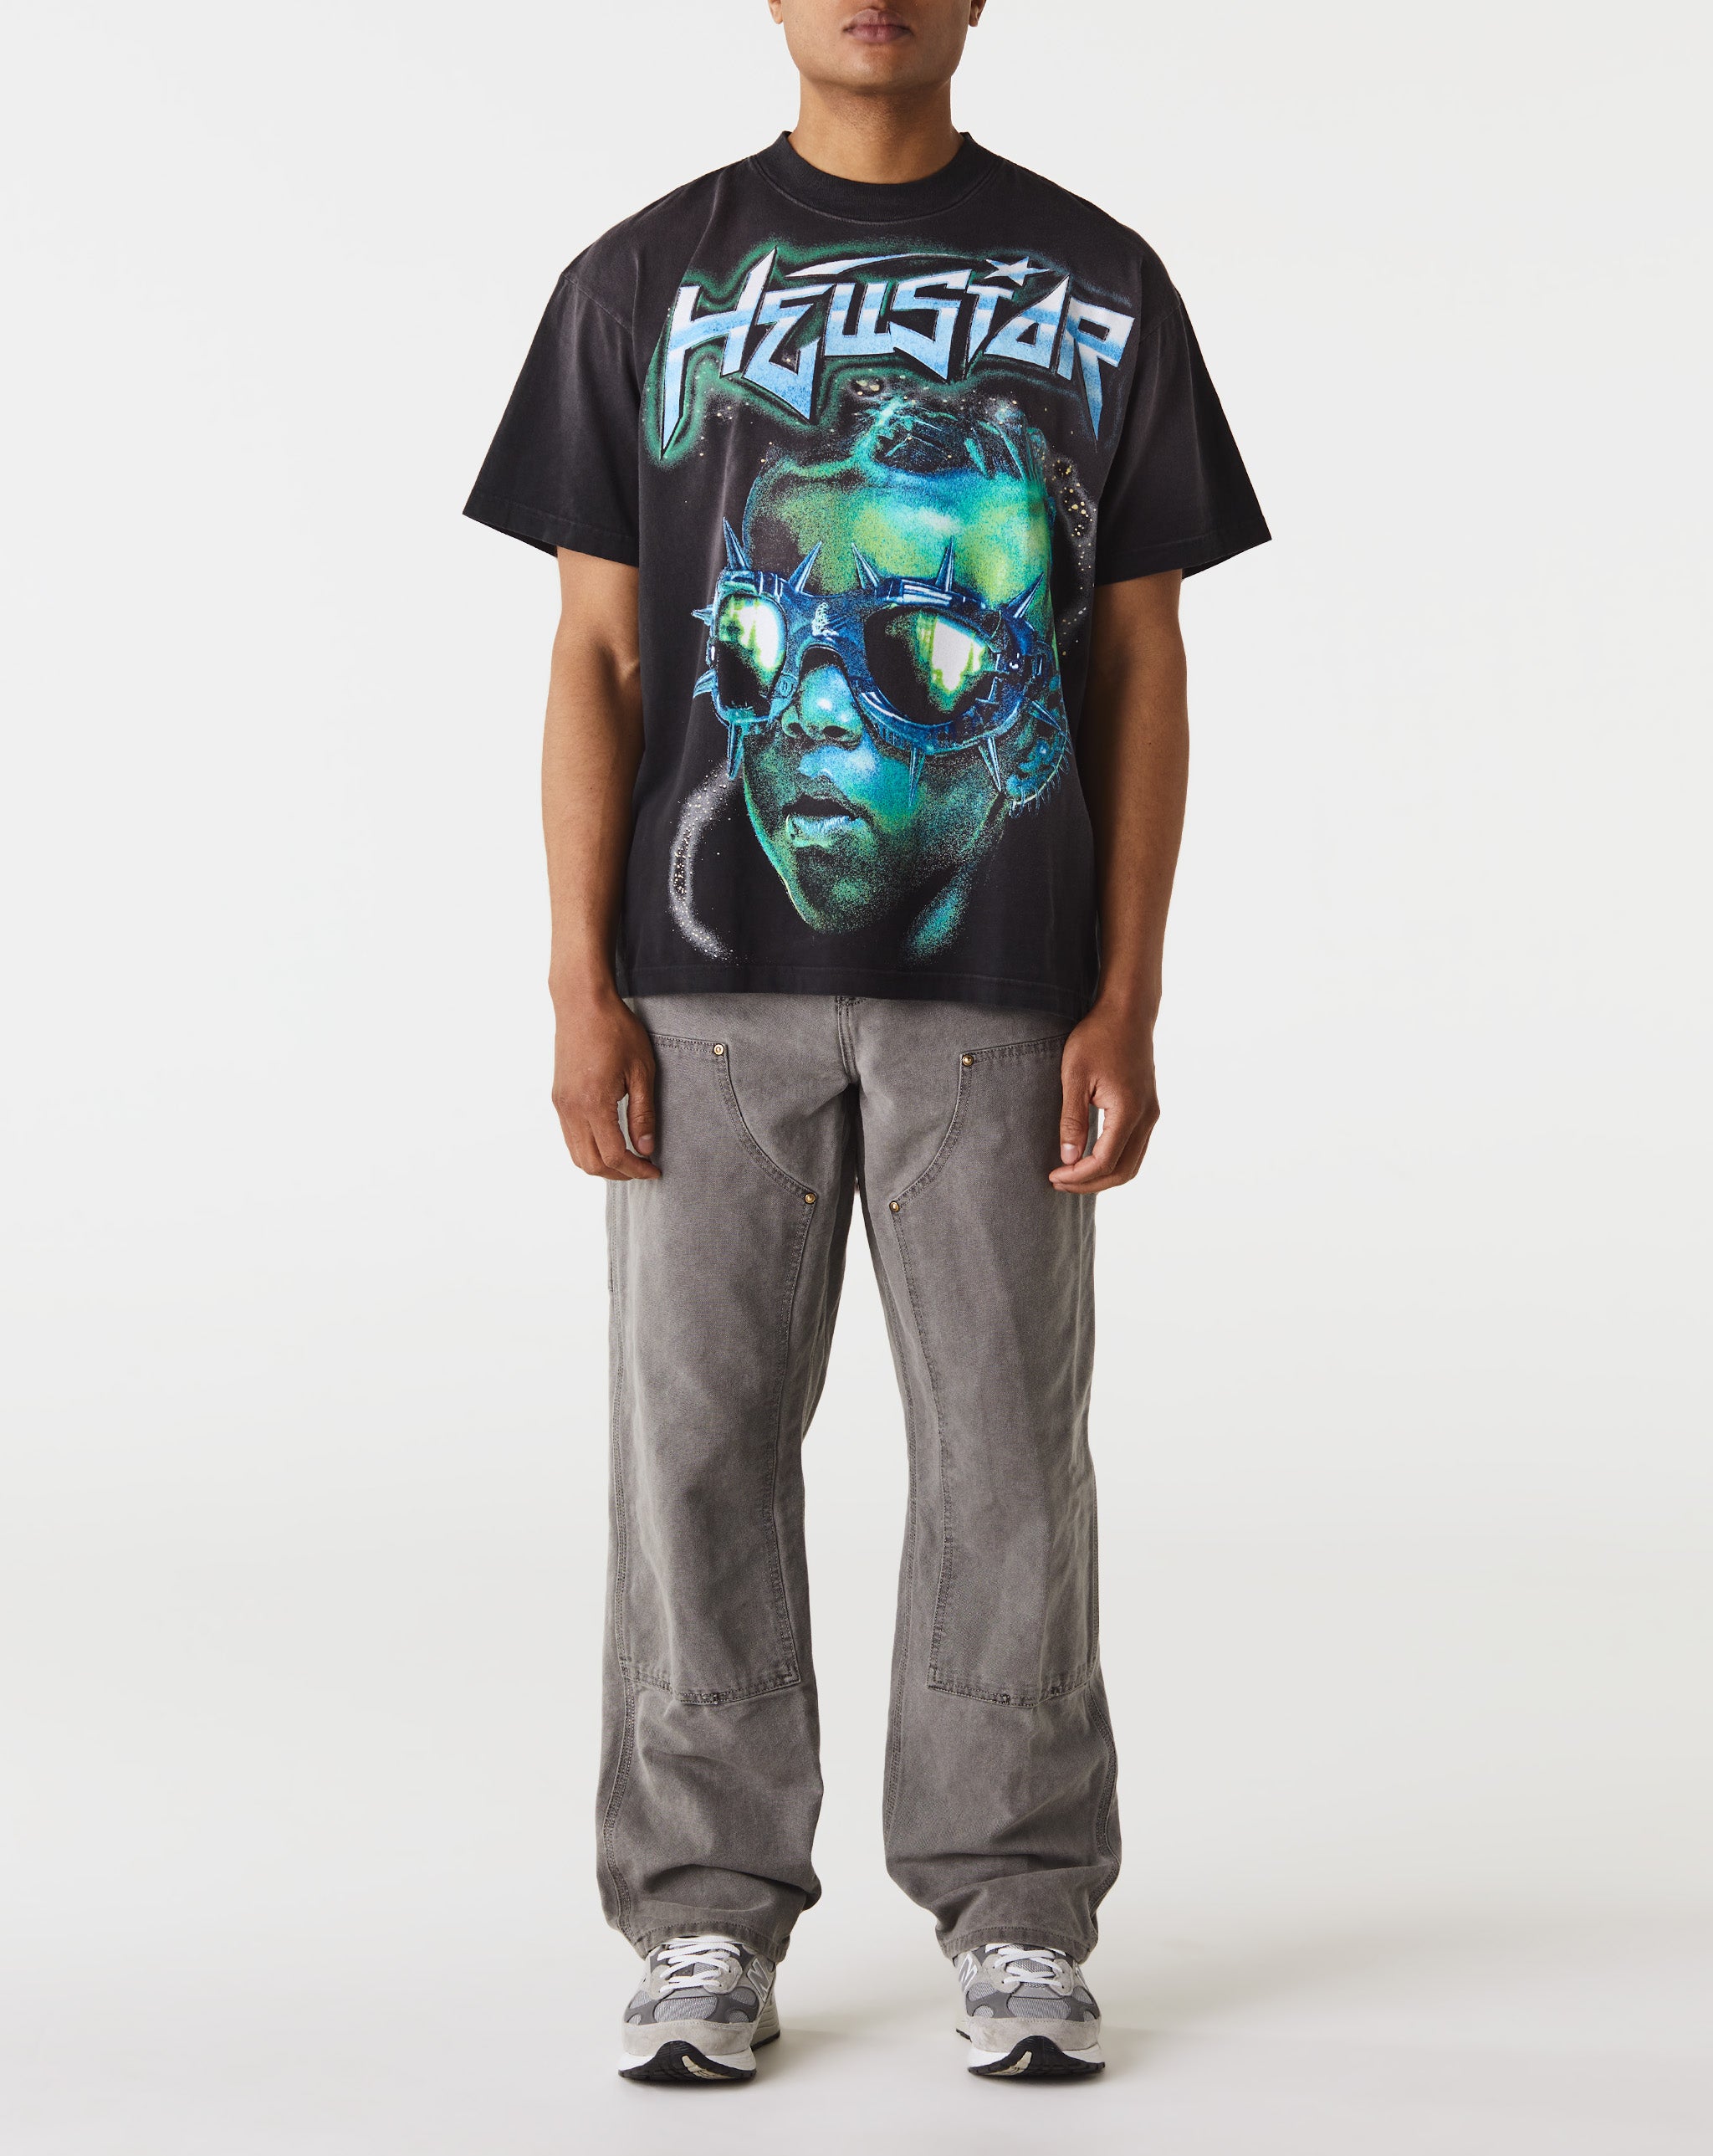 Hellstar The Future T-Shirt  - XHIBITION